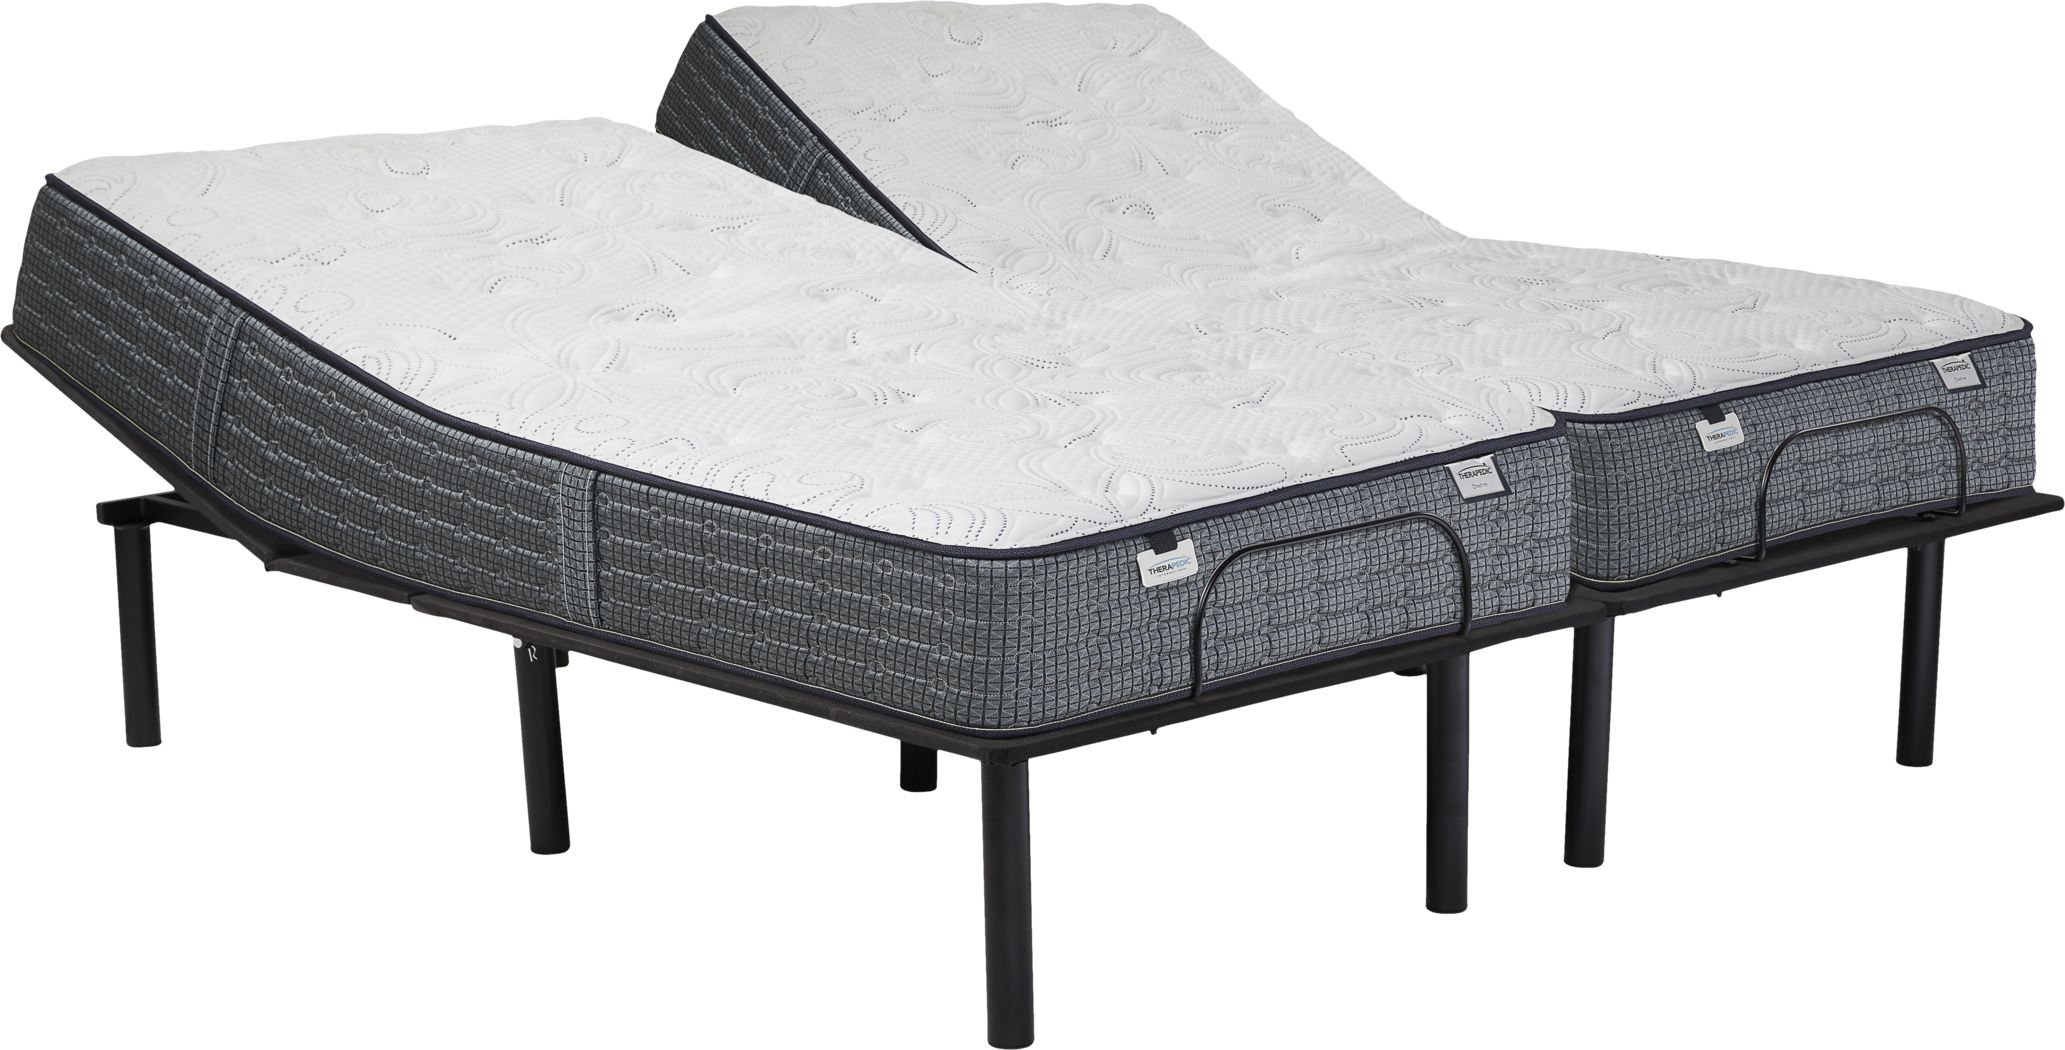 beautyrest hybrid geneva lake king mattress set reviews